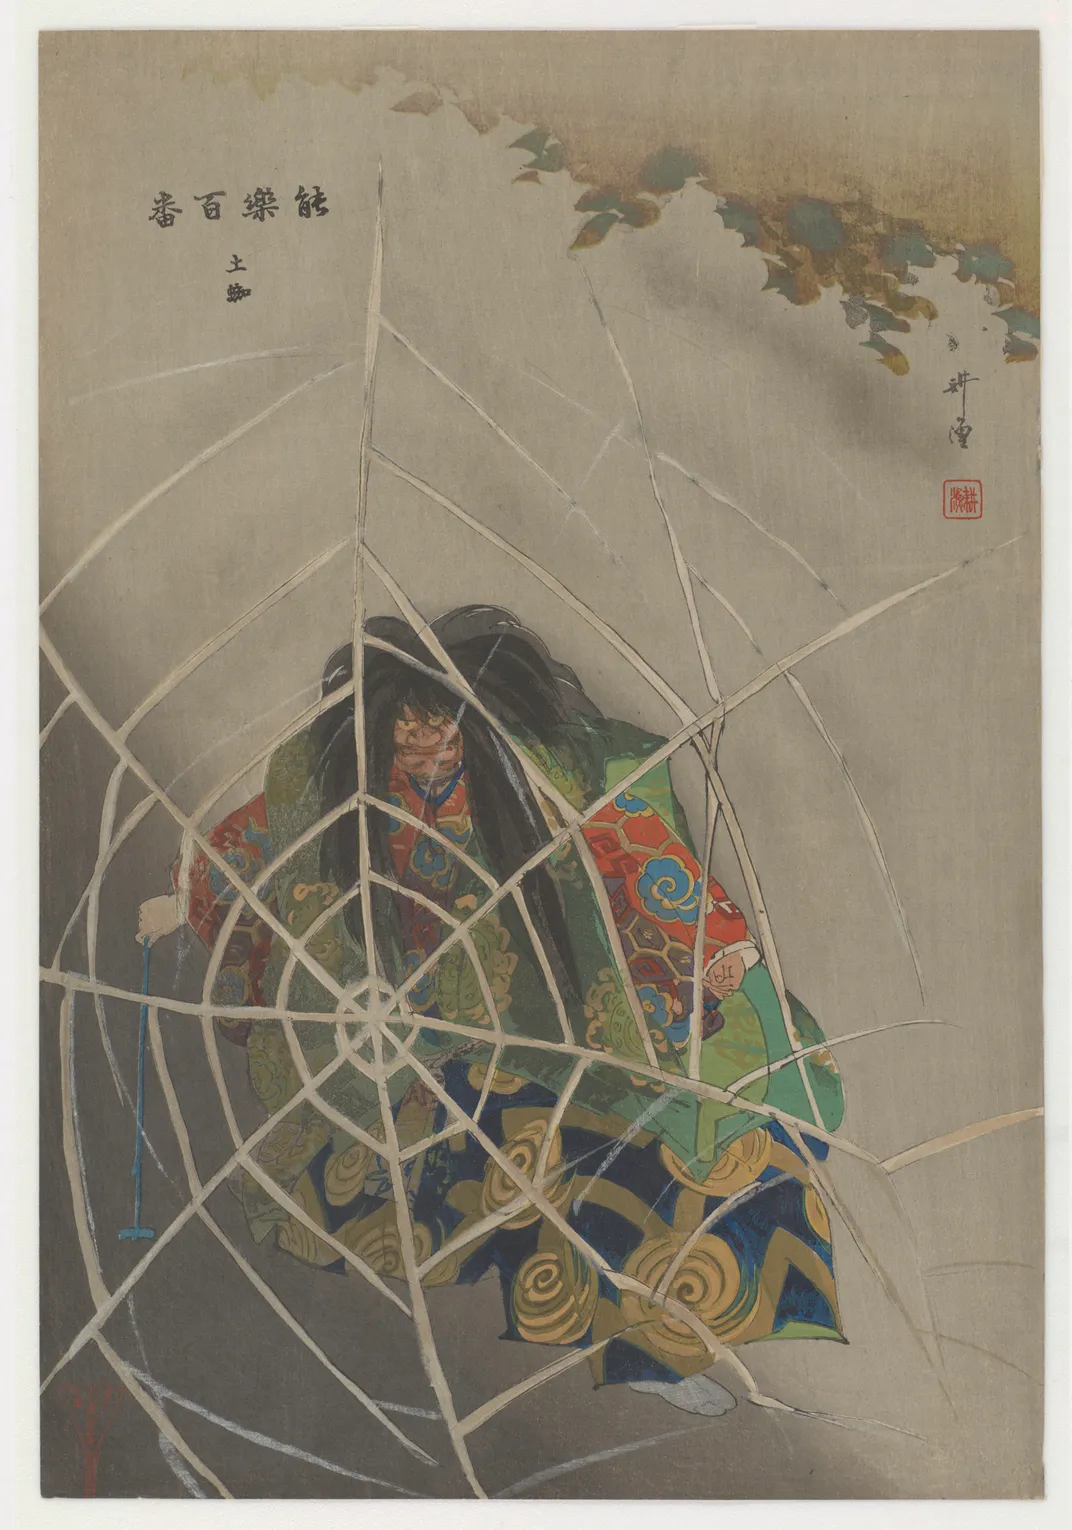 Tsuchigumo, From Prints of One Hundred Noh Plays, Tsukioka Kogyo, woodblock print, 1922-1925